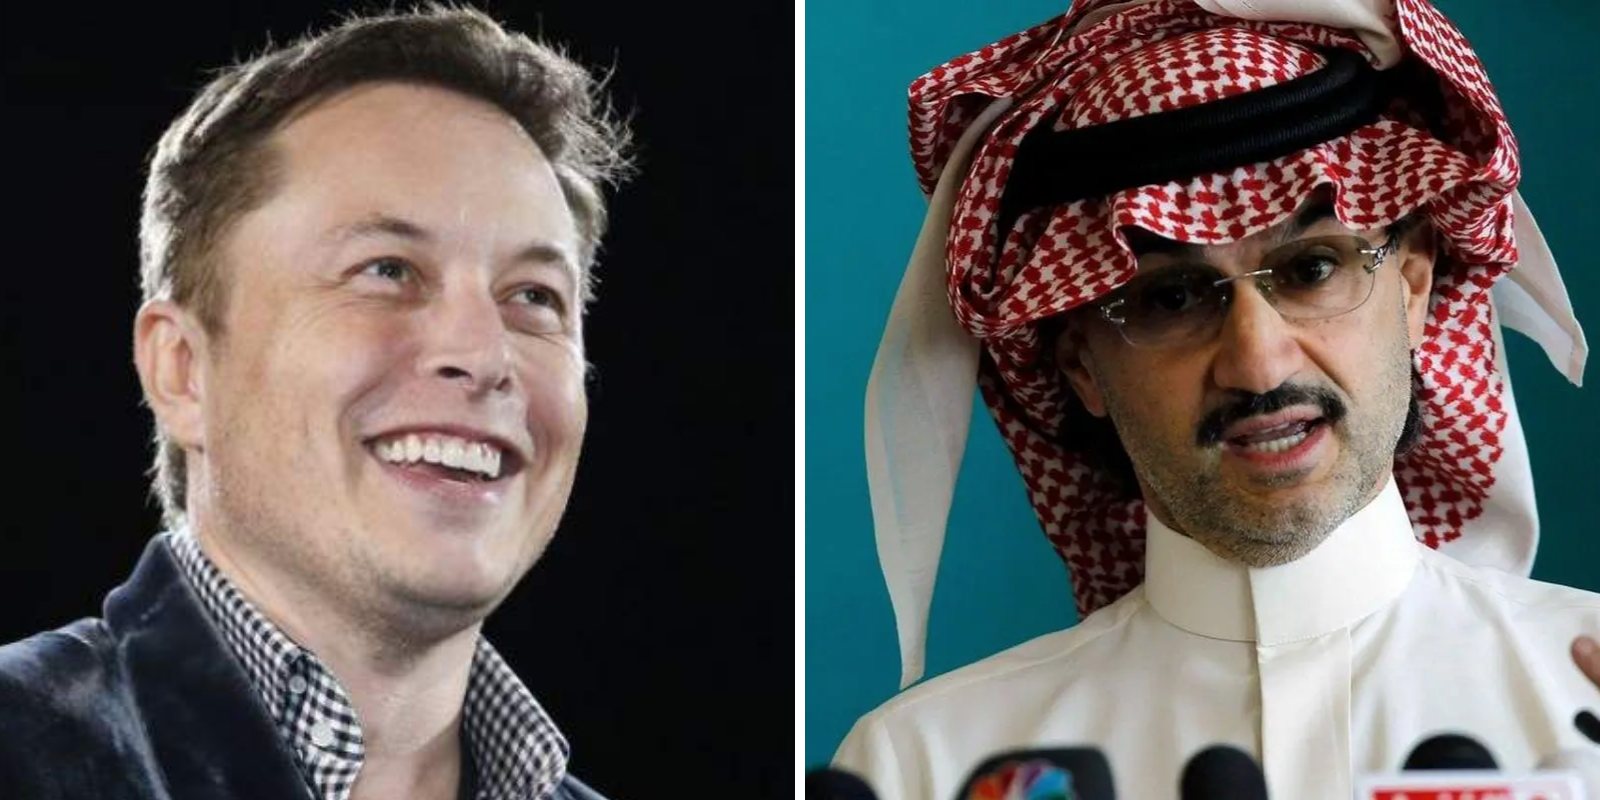 BREAKING: Twitter shareholder Saudi Prince Al Waleed rejects Musk's bid to take over platform